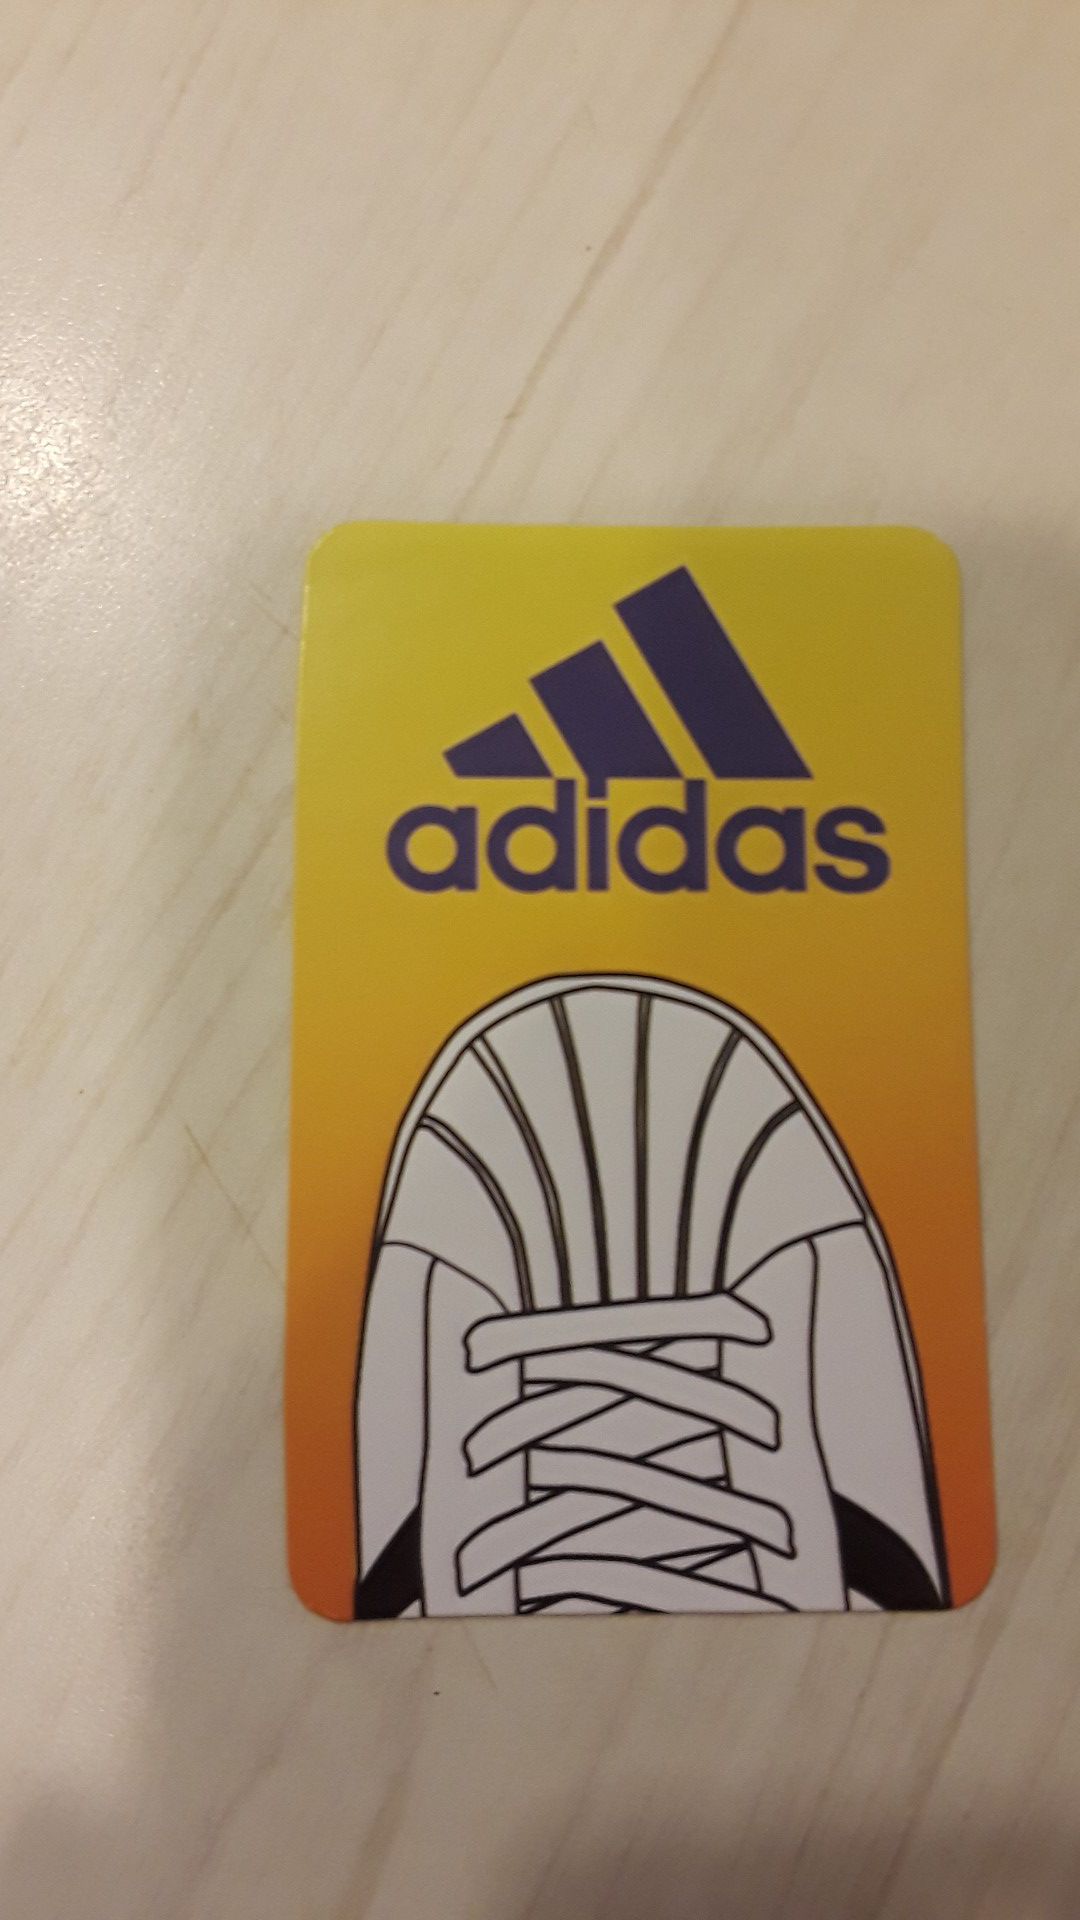 Adidas pass